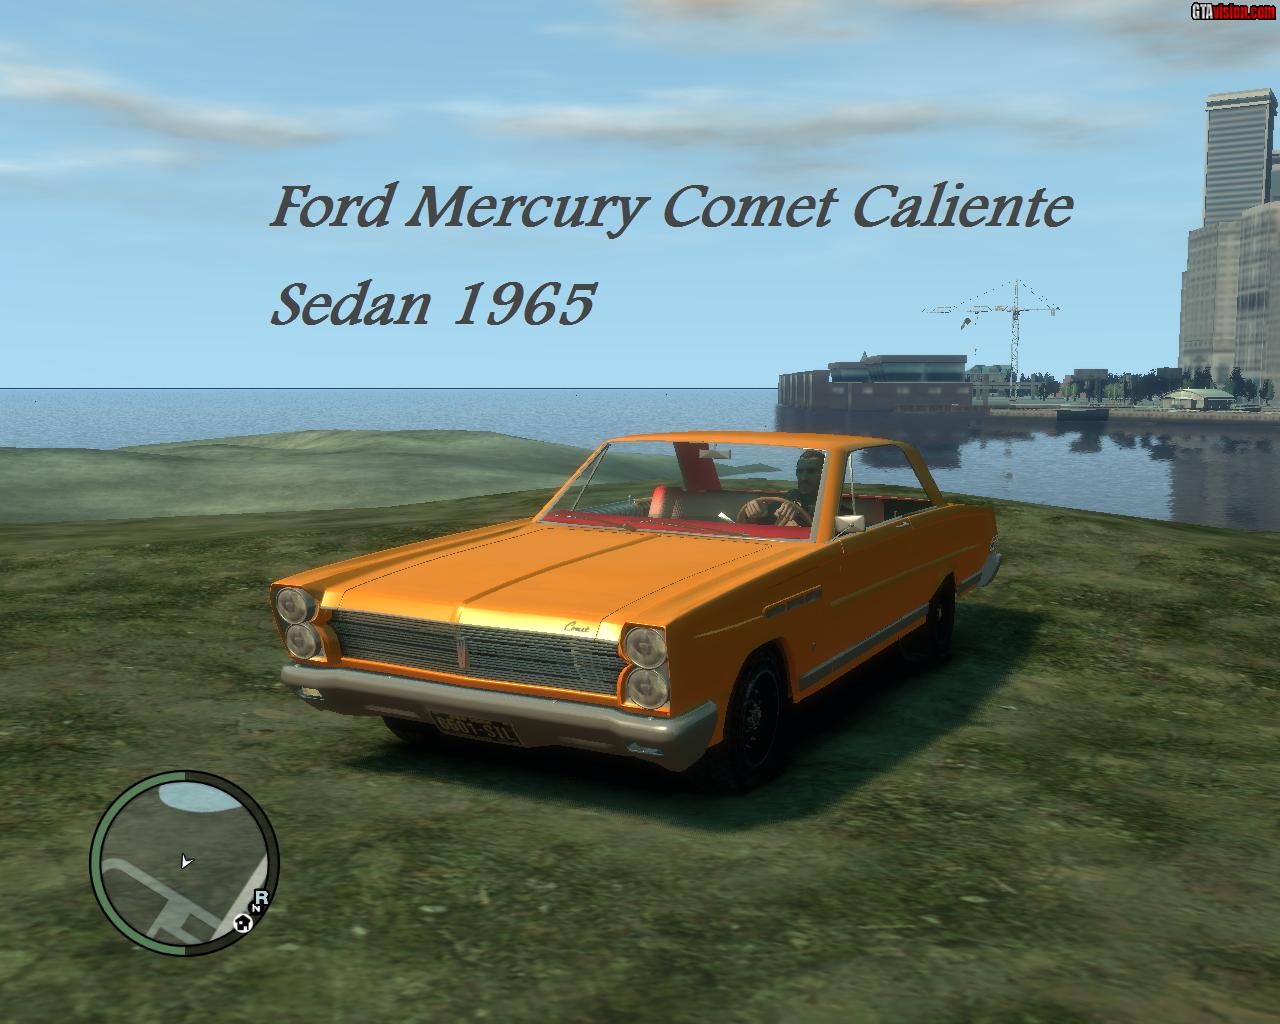 Ford mercury comet caliente sedan #1